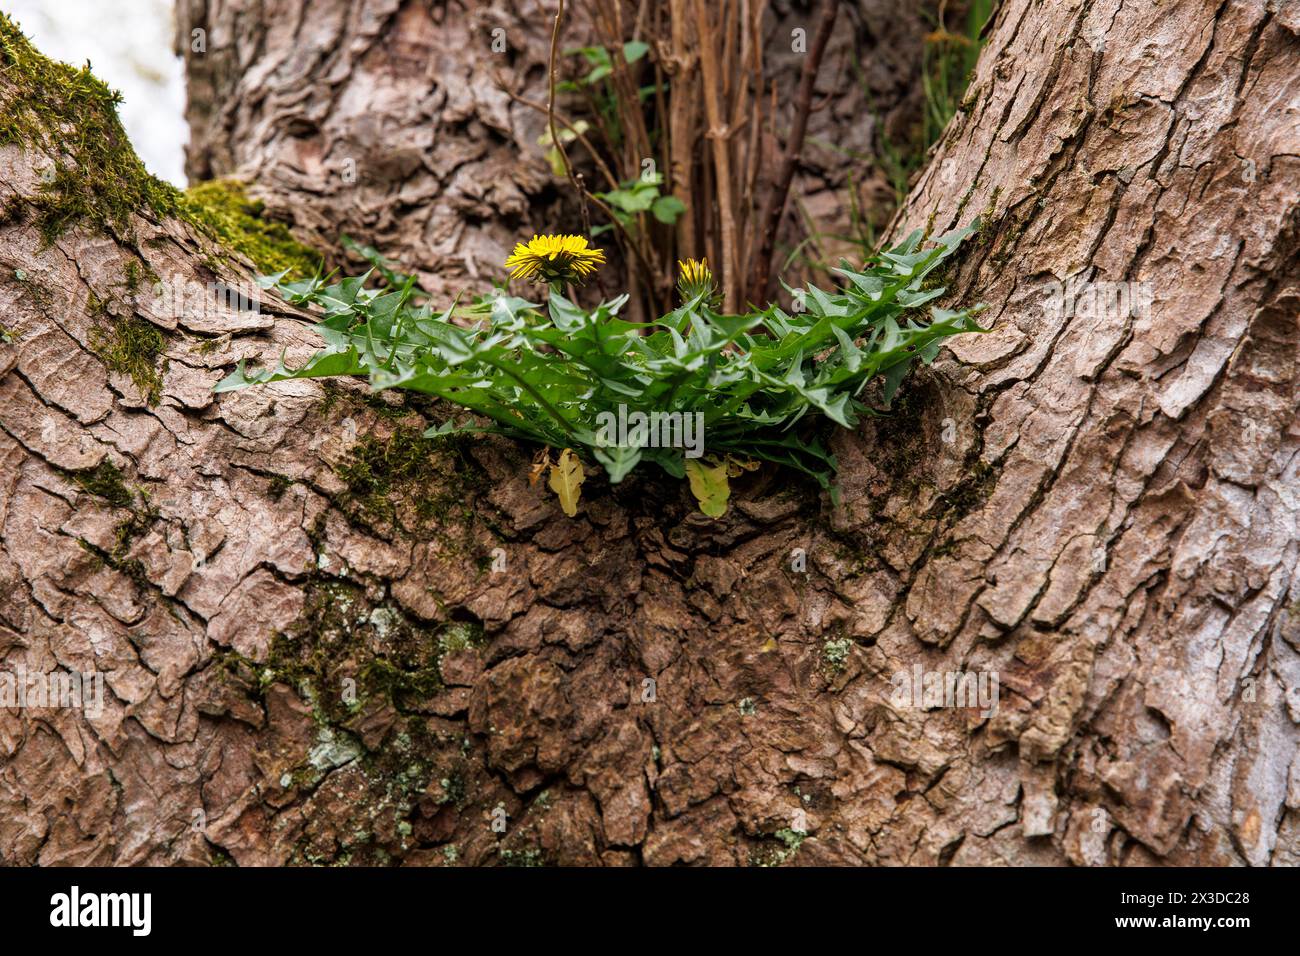 pissenlit (lat. Taraxacum) poussant sur une branche fourchue d'un arbre, Allemagne. Loewenzahn (lat. Taraxacum) waechst in der Astgabel eines Baums, Deutschland Banque D'Images